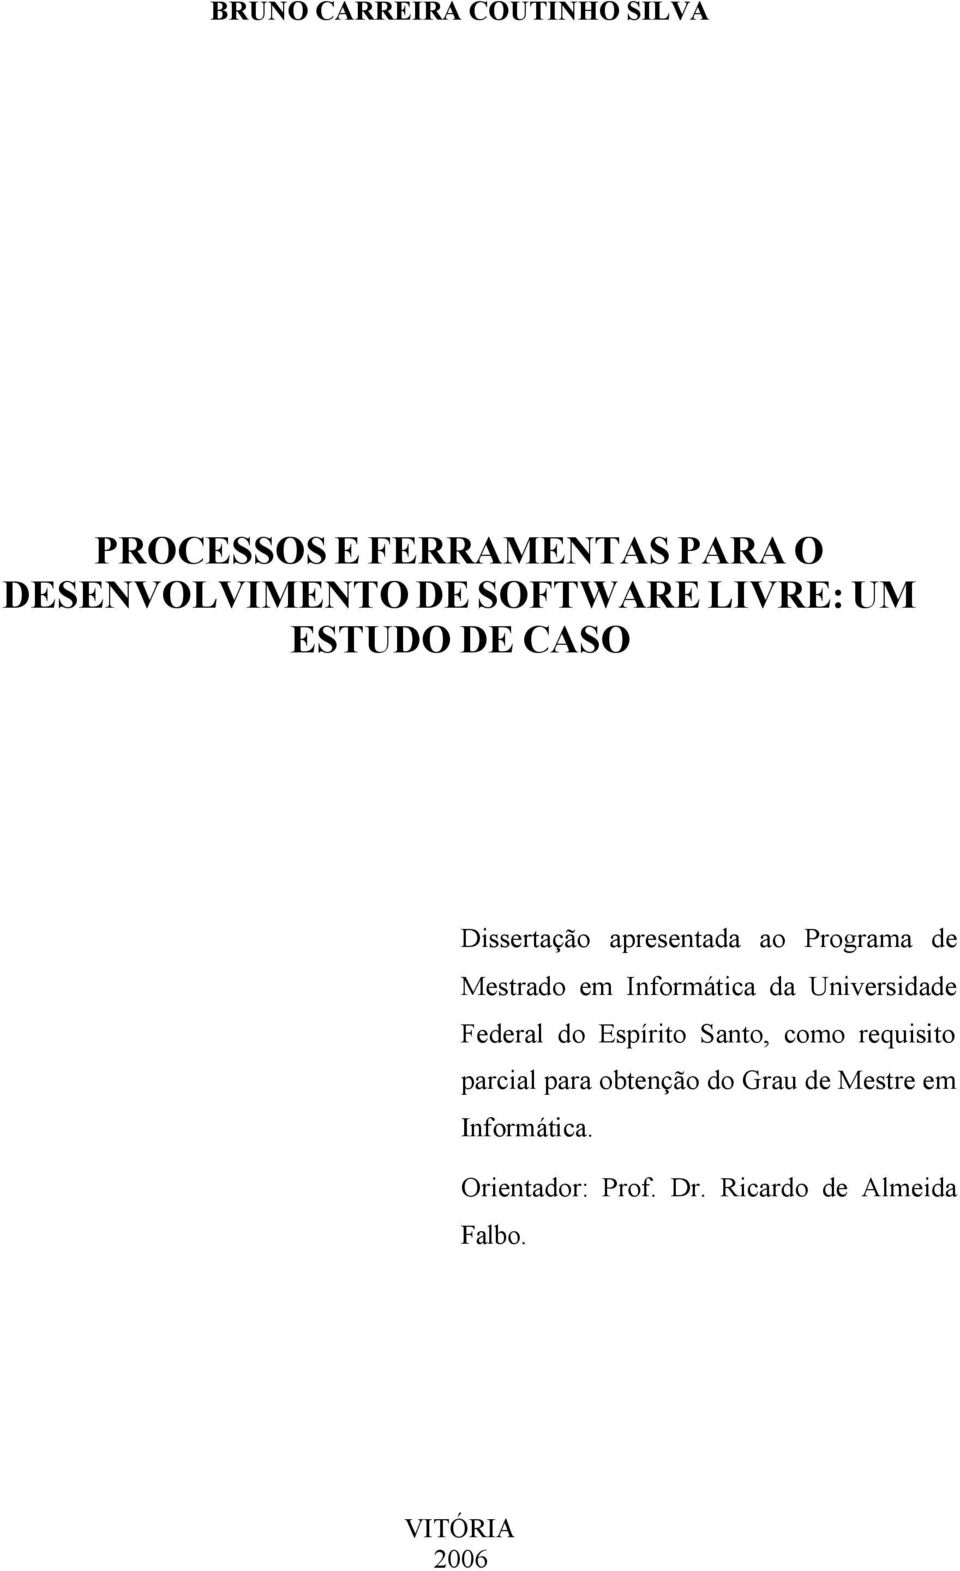 Informática da Universidade Federal do Espírito Santo, como requisito parcial para